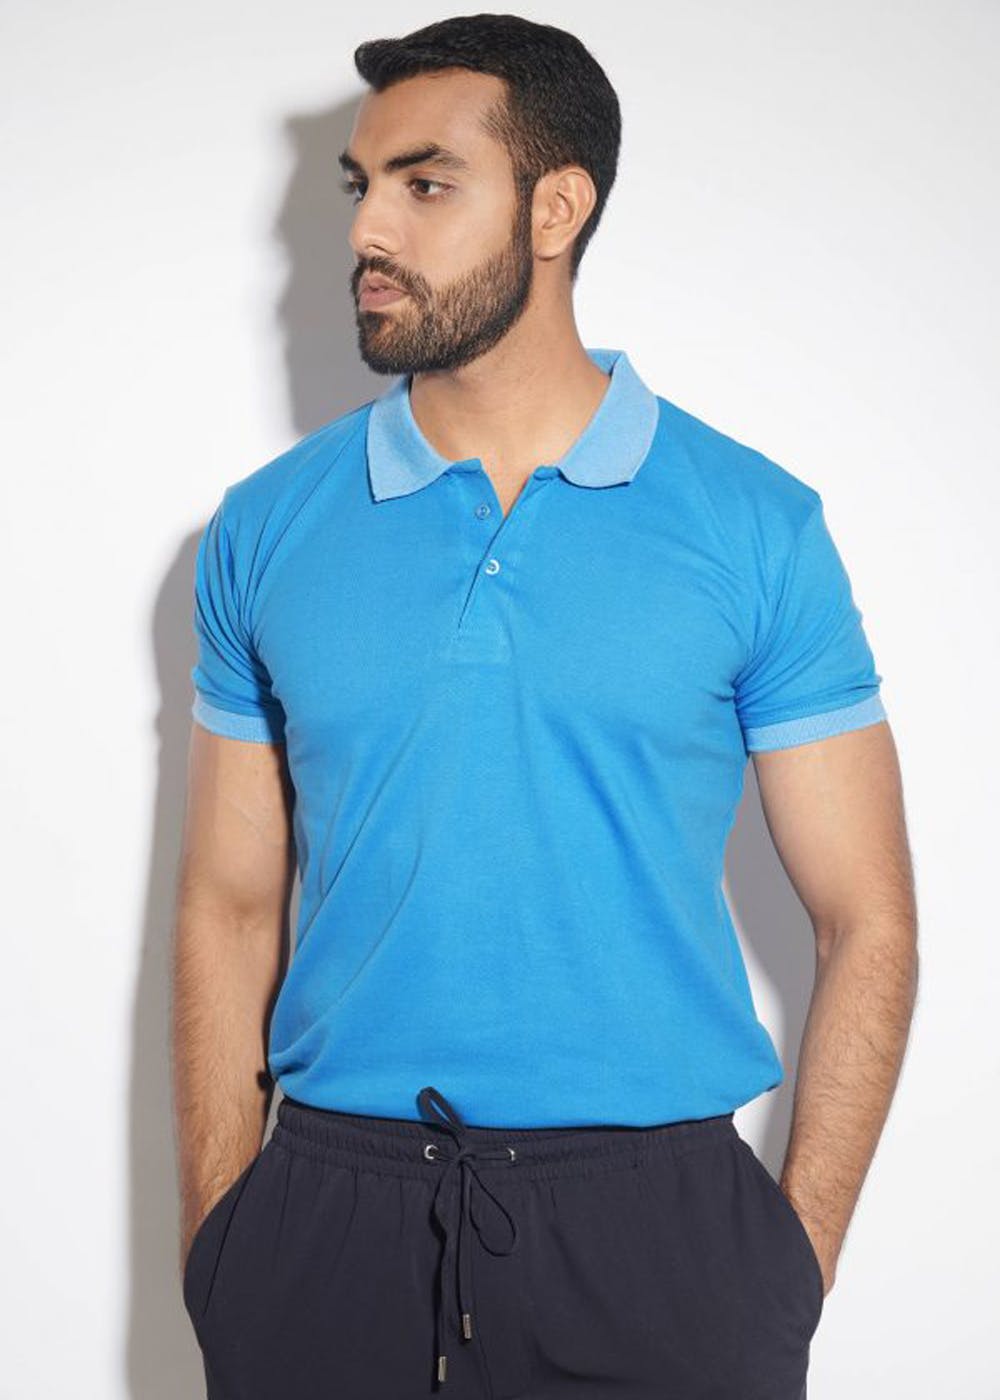 Get Deep Sky Blue Polo Shirt at ₹ 799 | LBB Shop